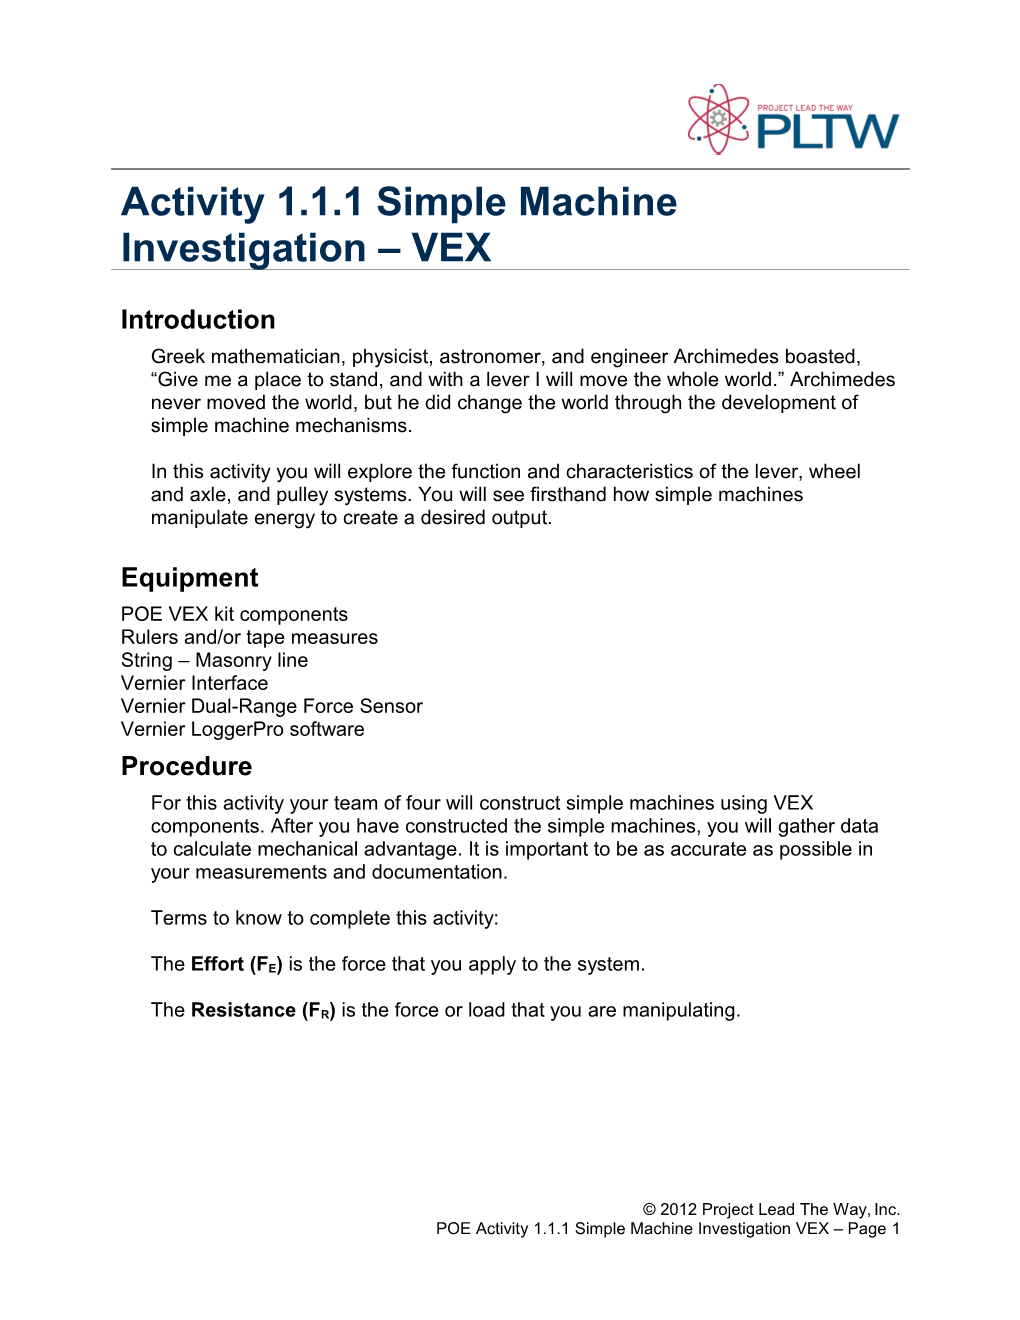 Activity 1.1.1 Simple Machine Investigation VEX